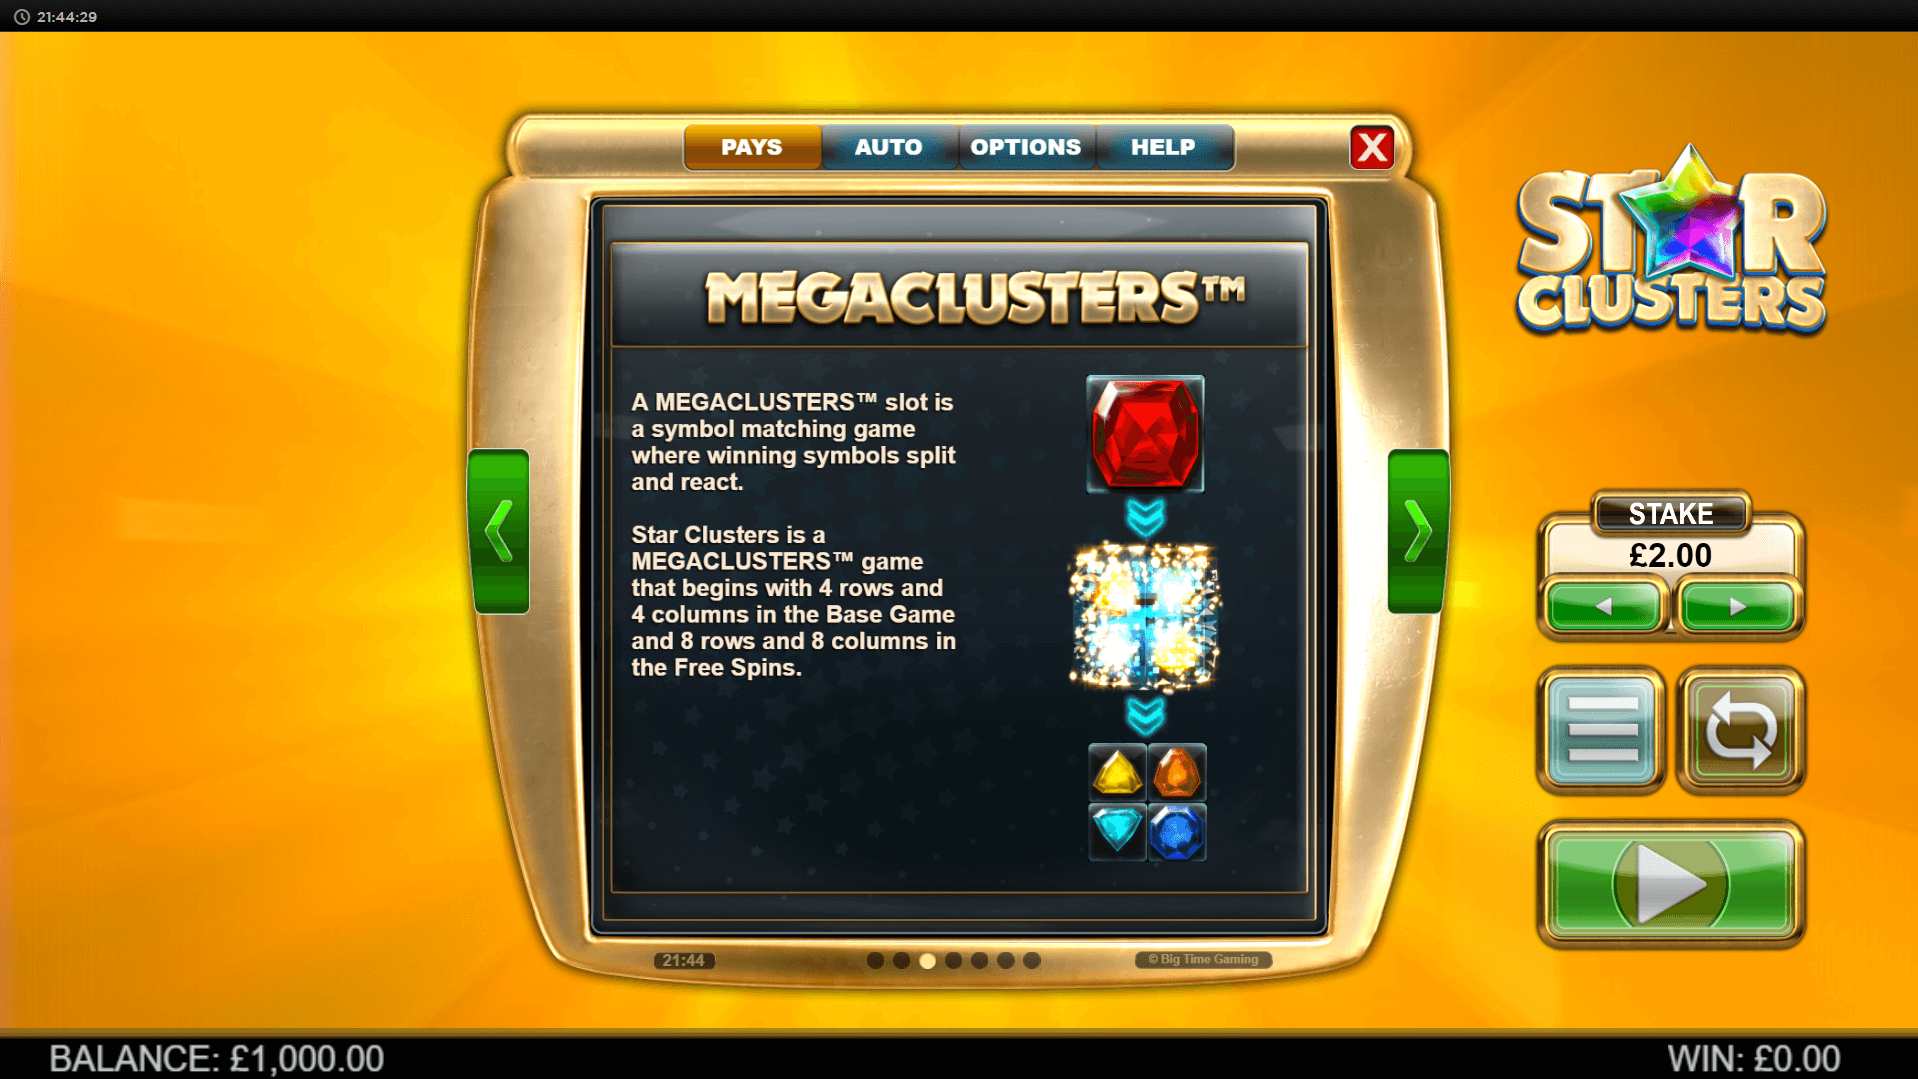 star clusters megaclusters slot machine detail image 1